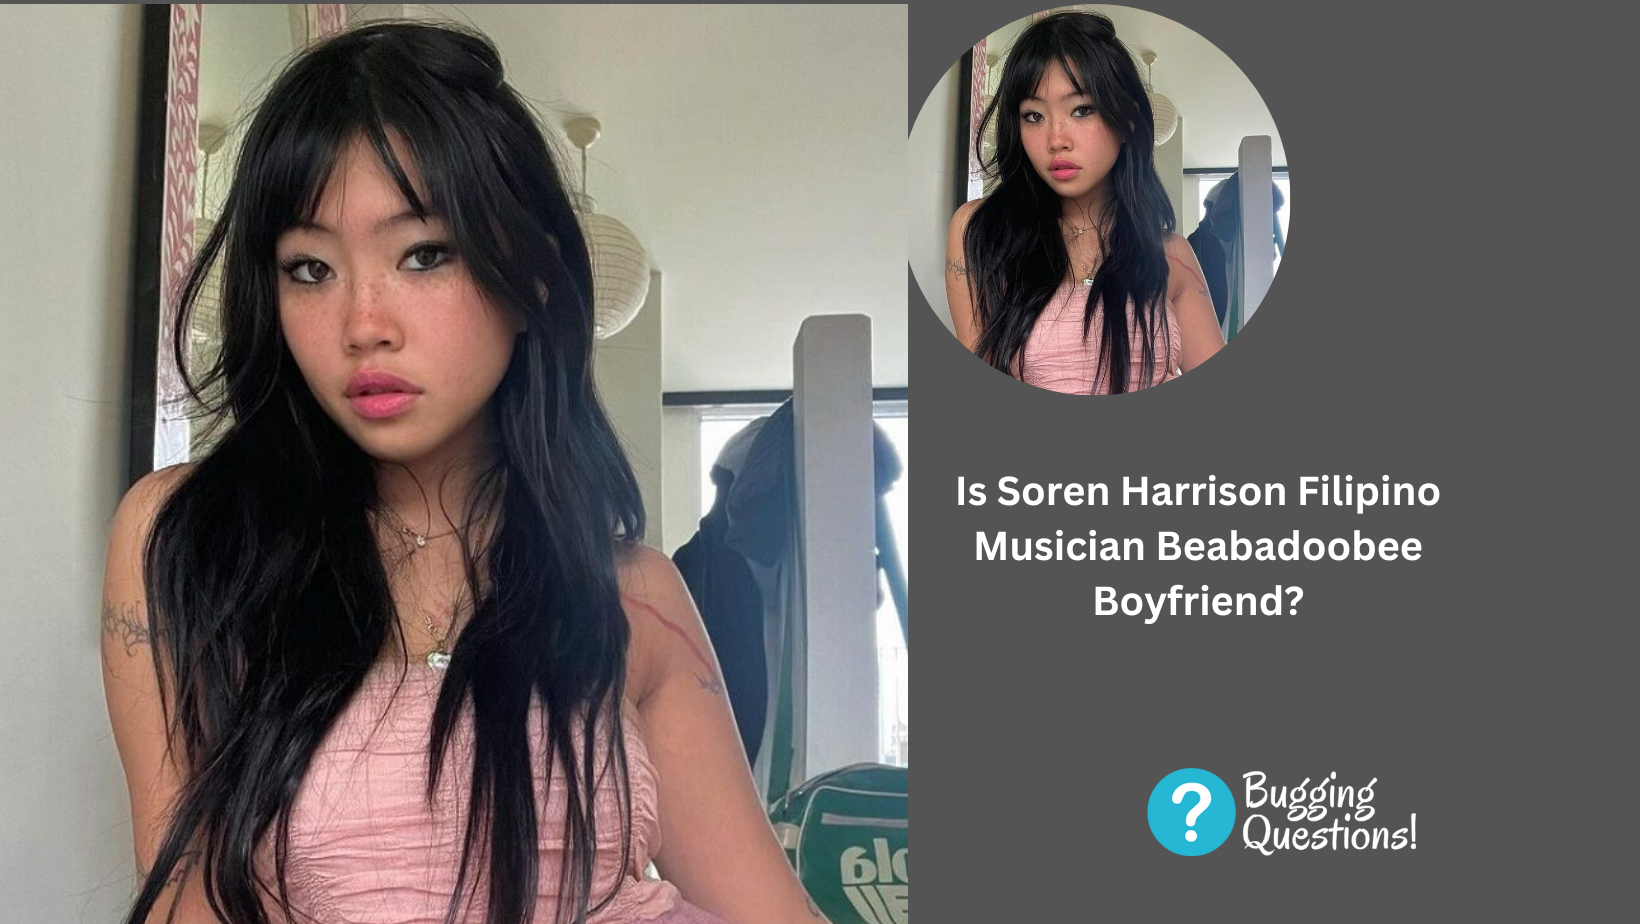 Is Soren Harrison Filipino Musician Beabadoobee Boyfriend?